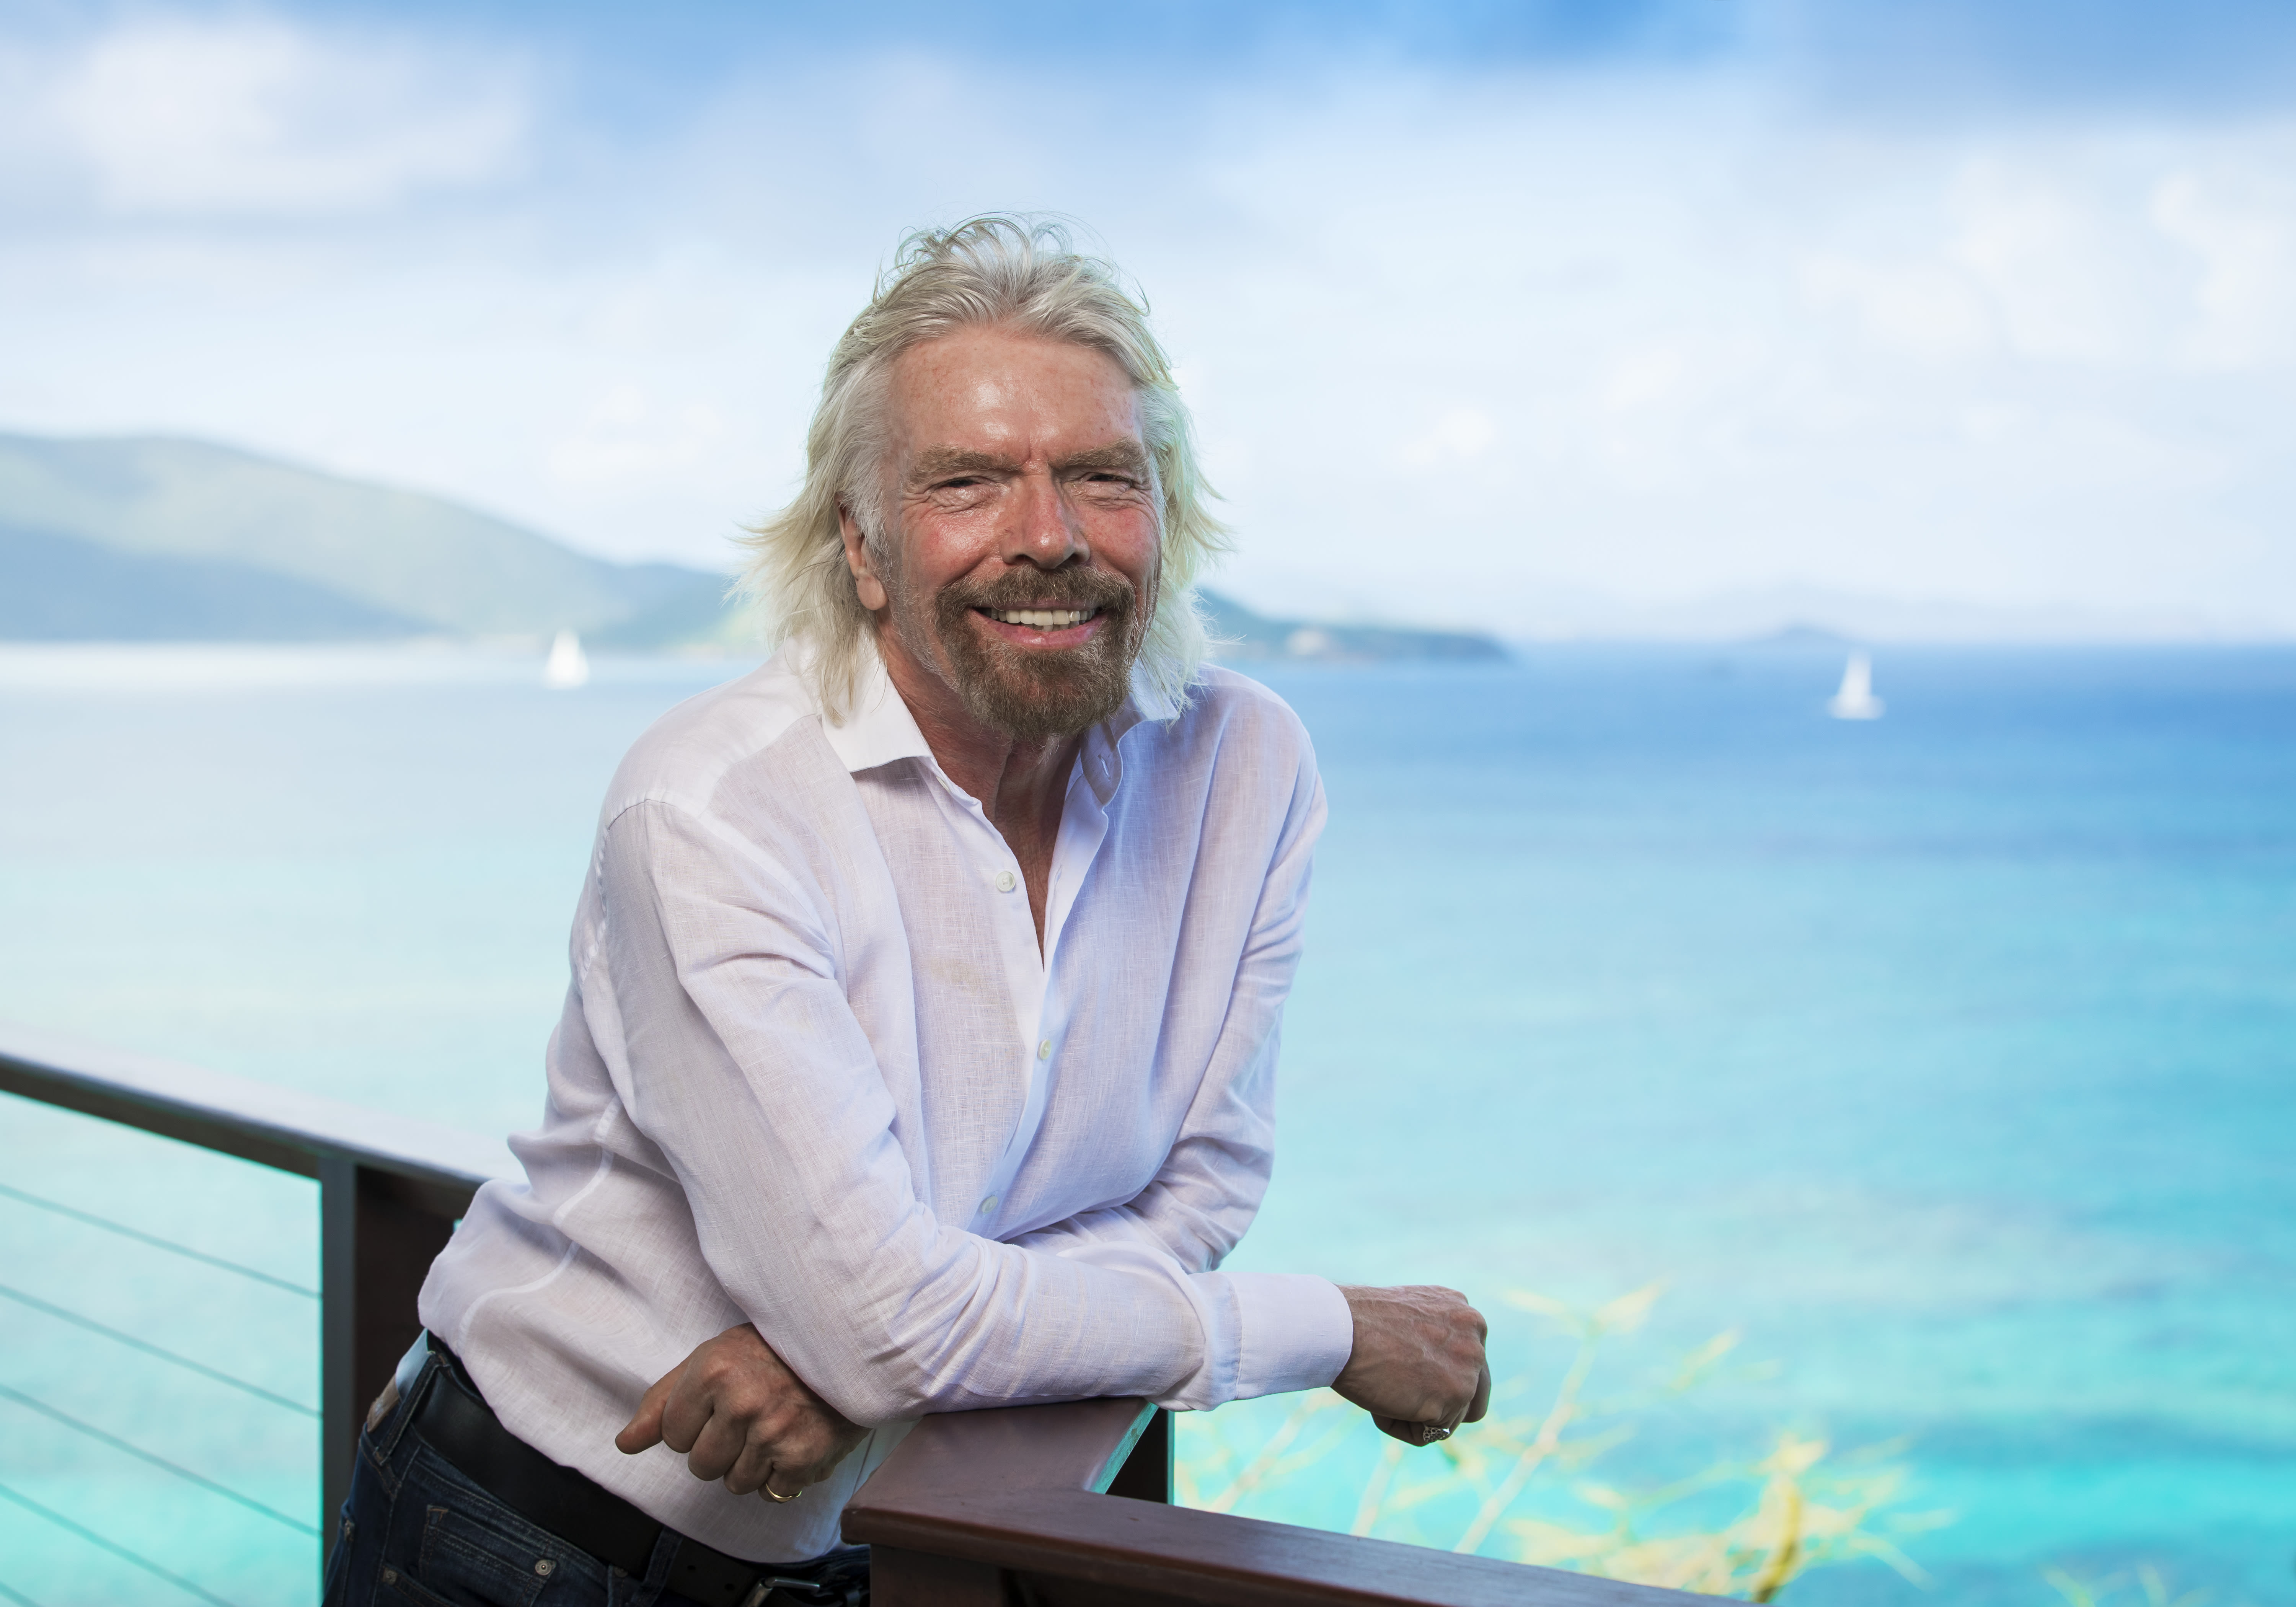 Richard Branson on Necker Island, with the ocean behind him